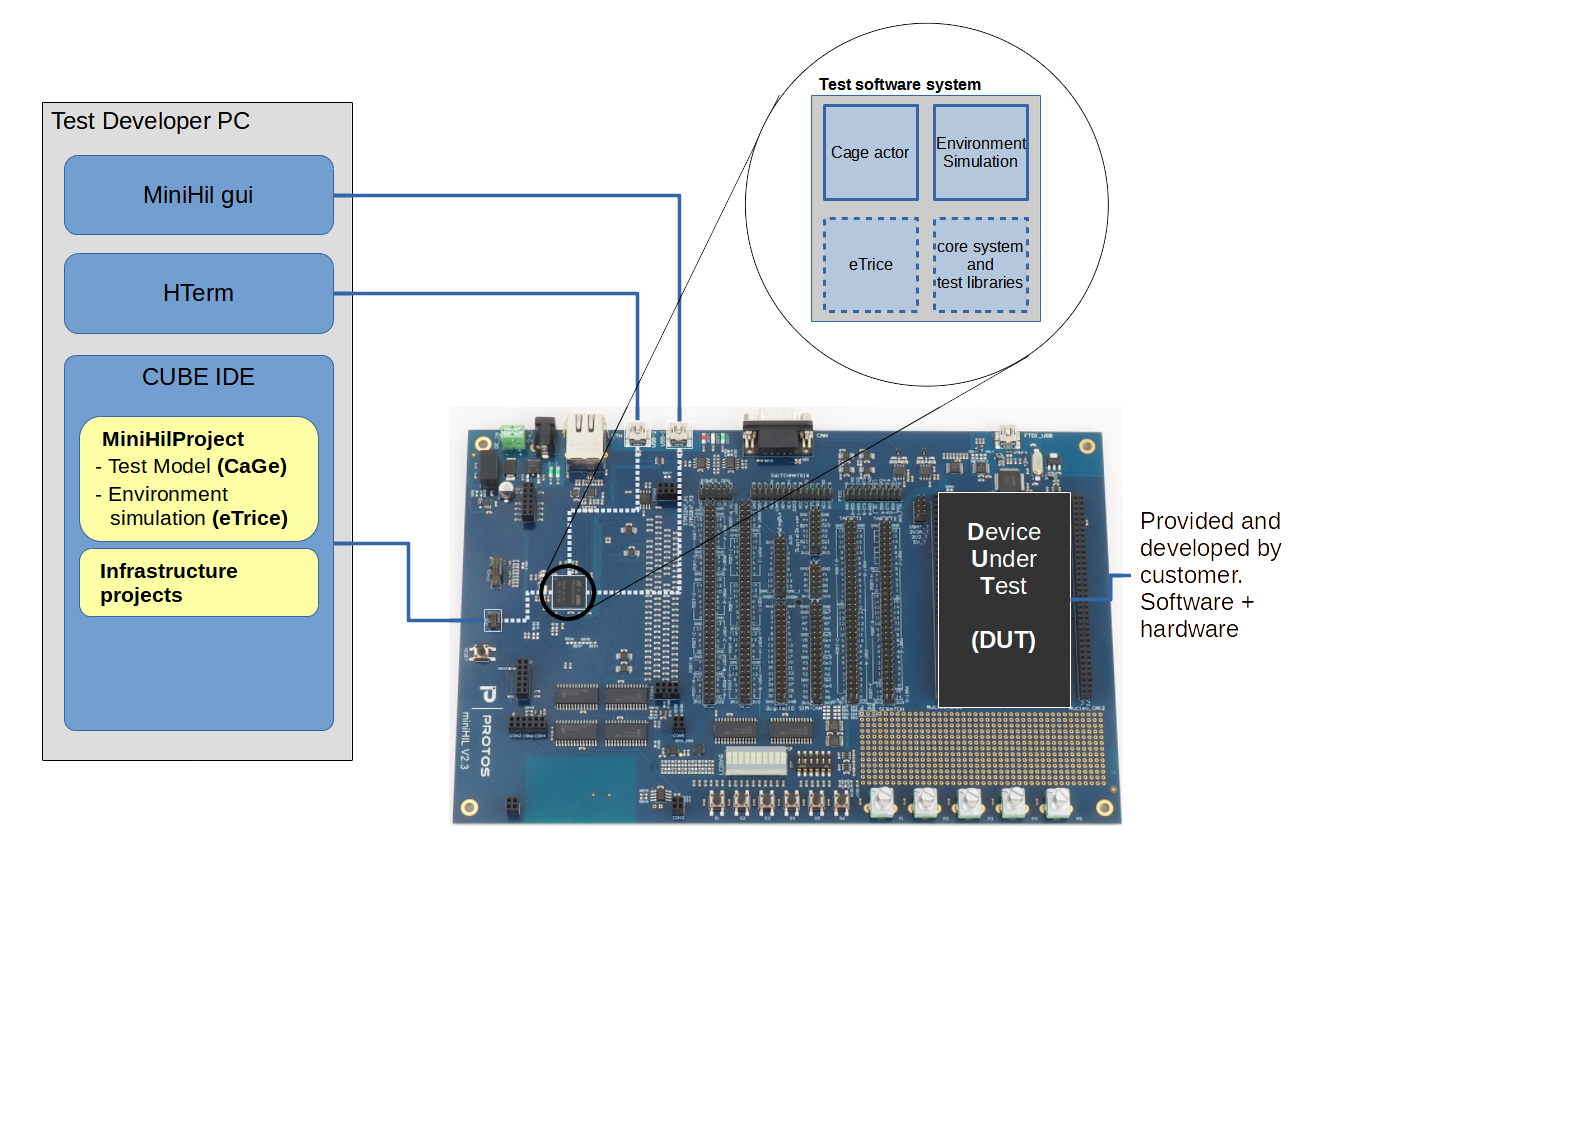 Software components on miniHIL board